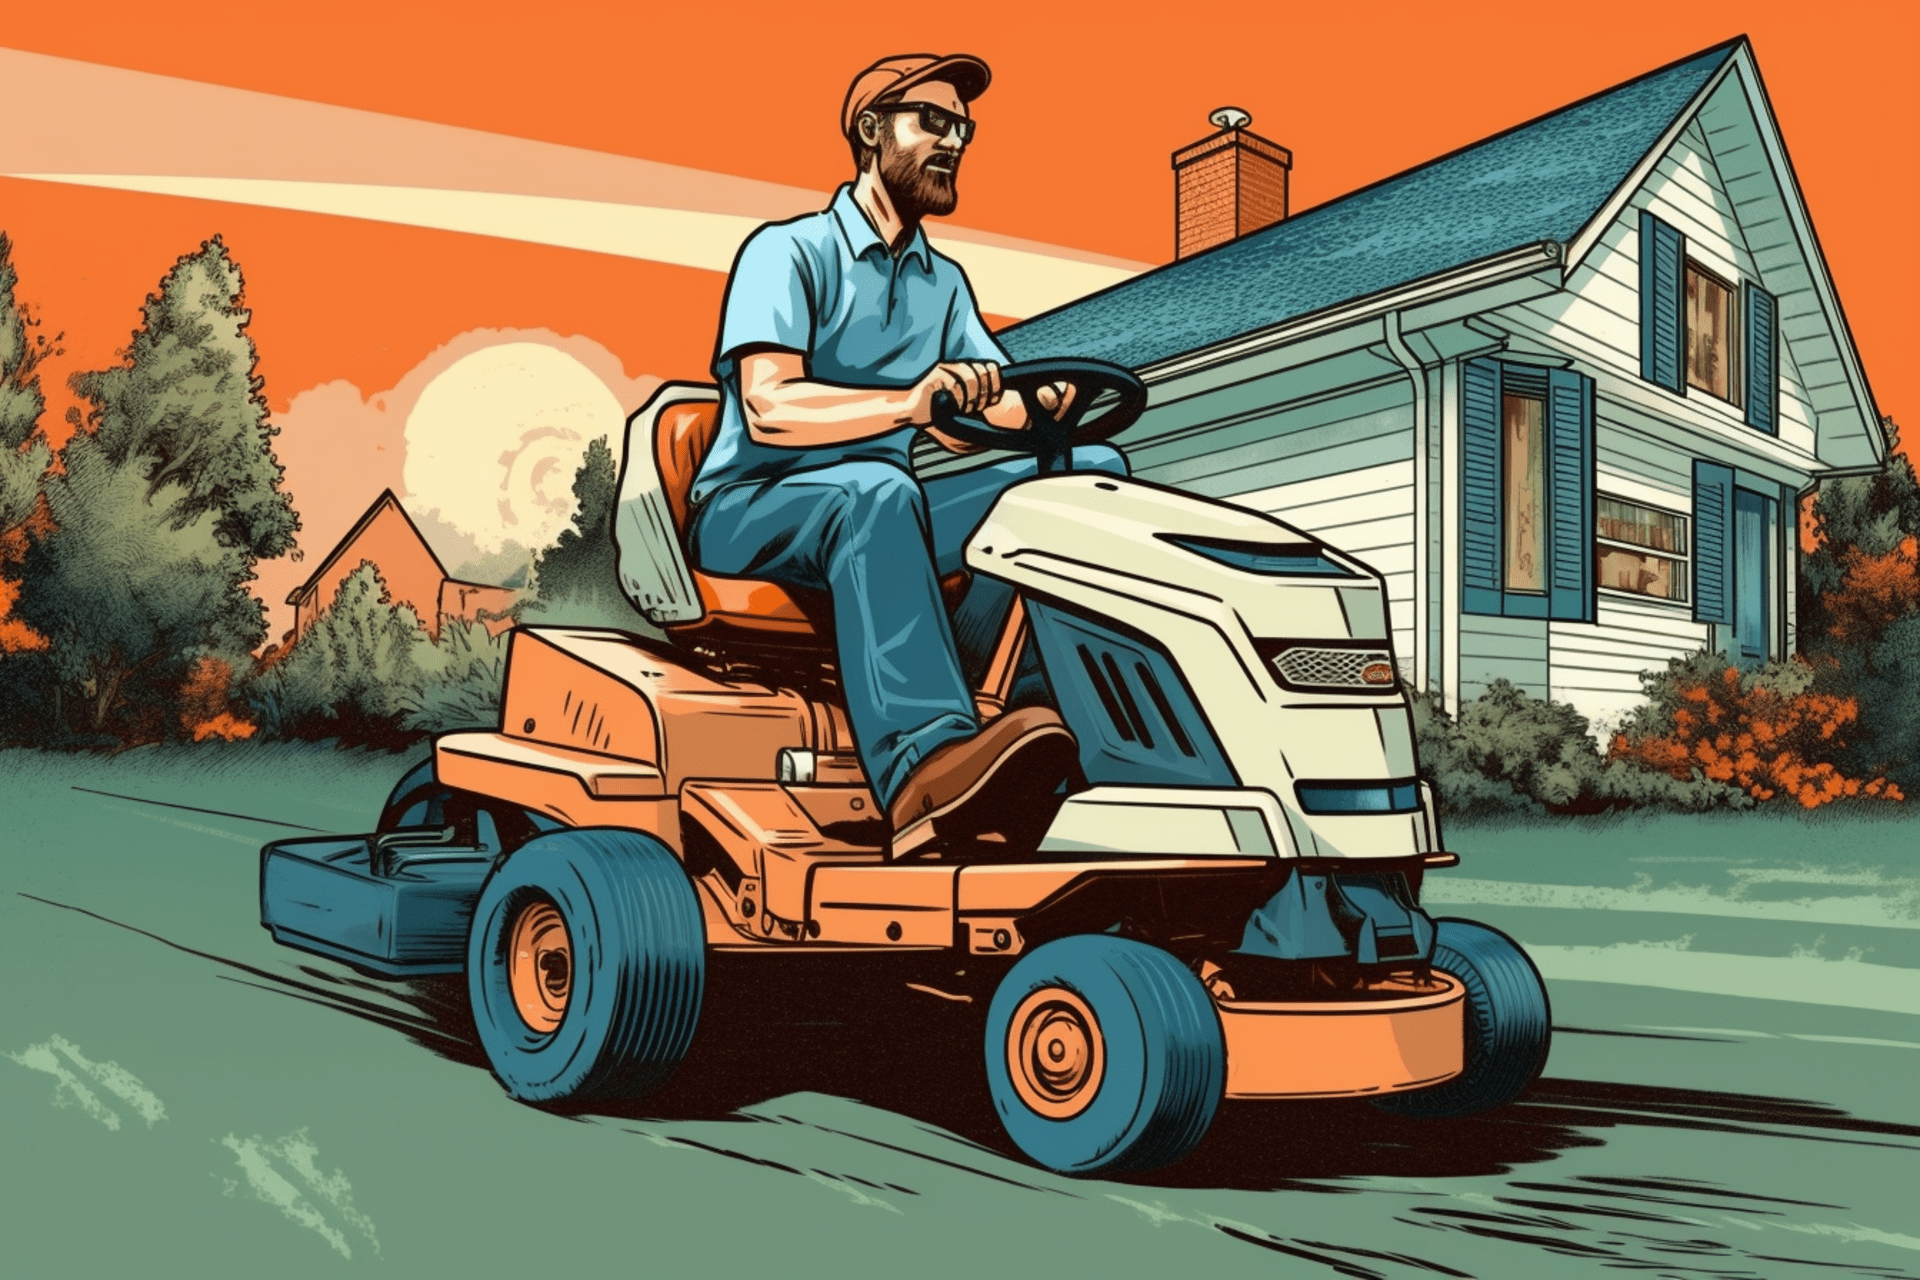 A man riding a riding mower